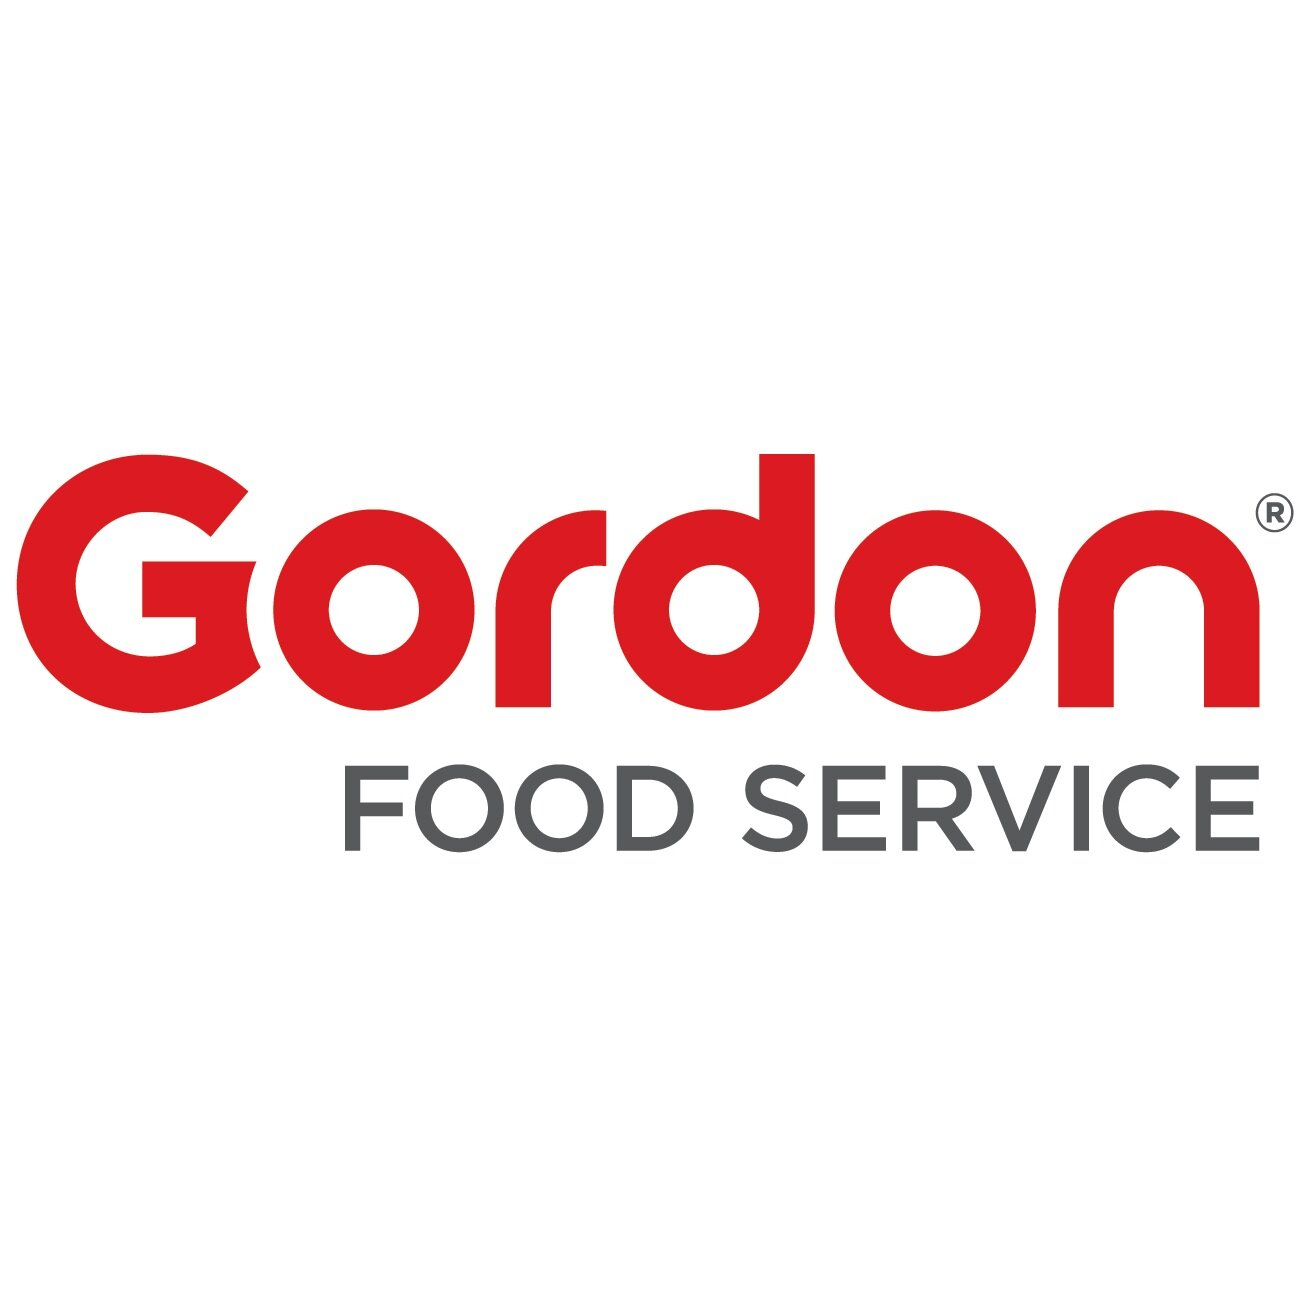 GordonFoodService_Logo_4c.jpg